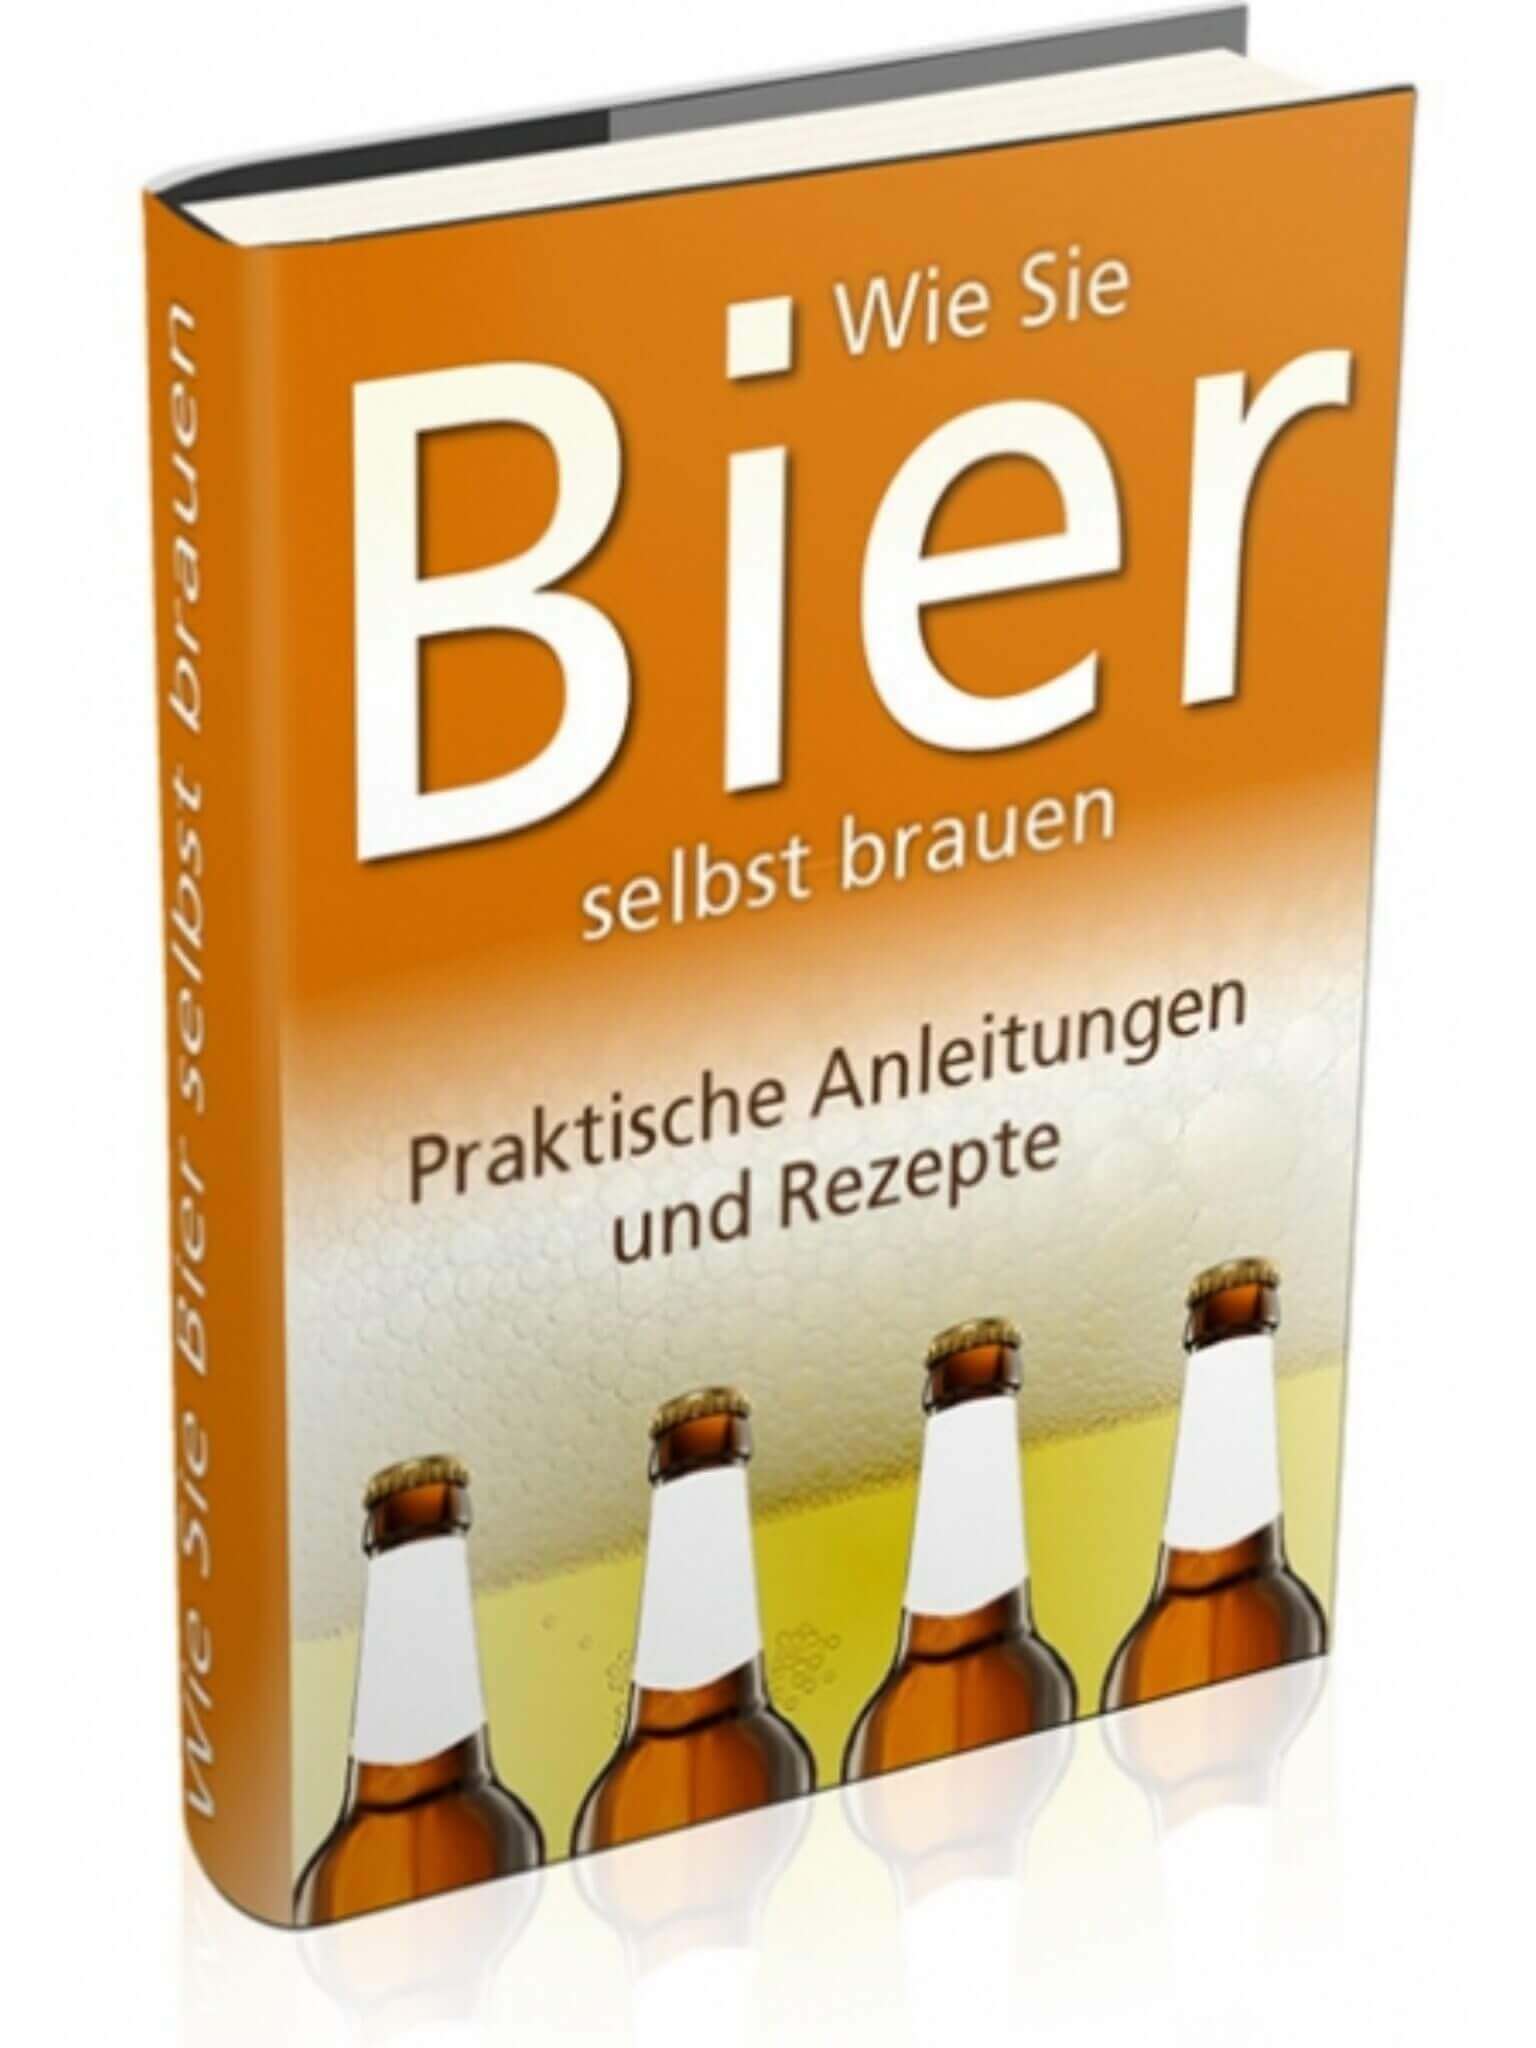 Bier selber brauen - Anleitung & Ratgeber von Tom Kreuzer - becomePro